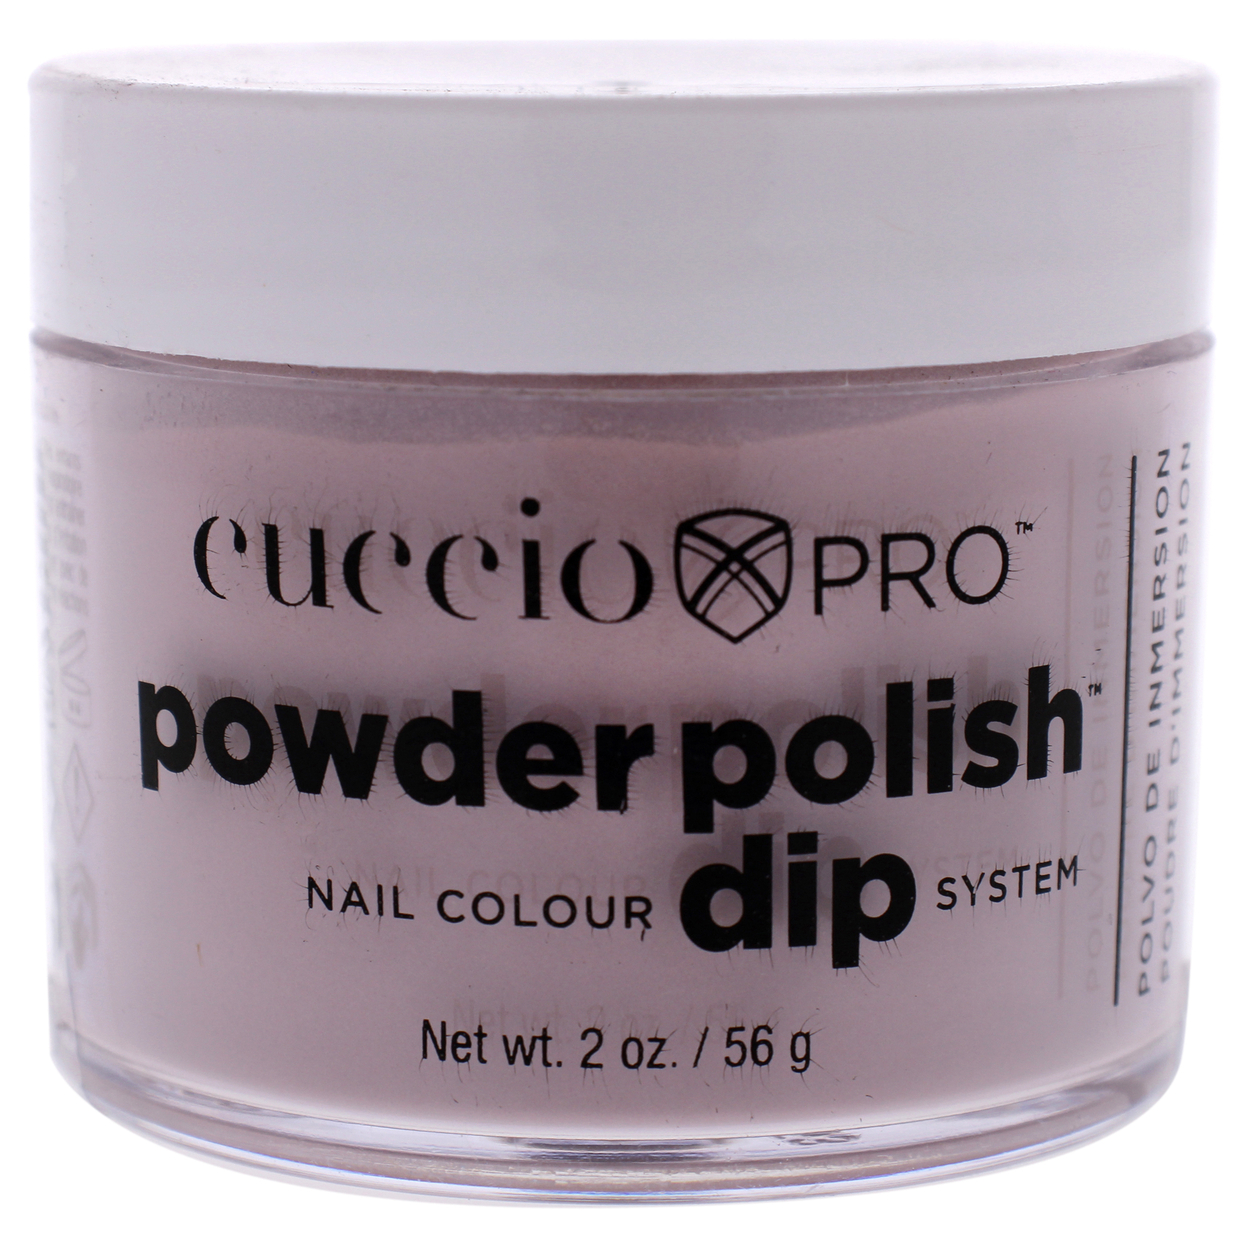 Cuccio Colour Pro Powder Polish Nail Colour Dip System - Nude-A-Tude Nail Powder 1.6 Oz